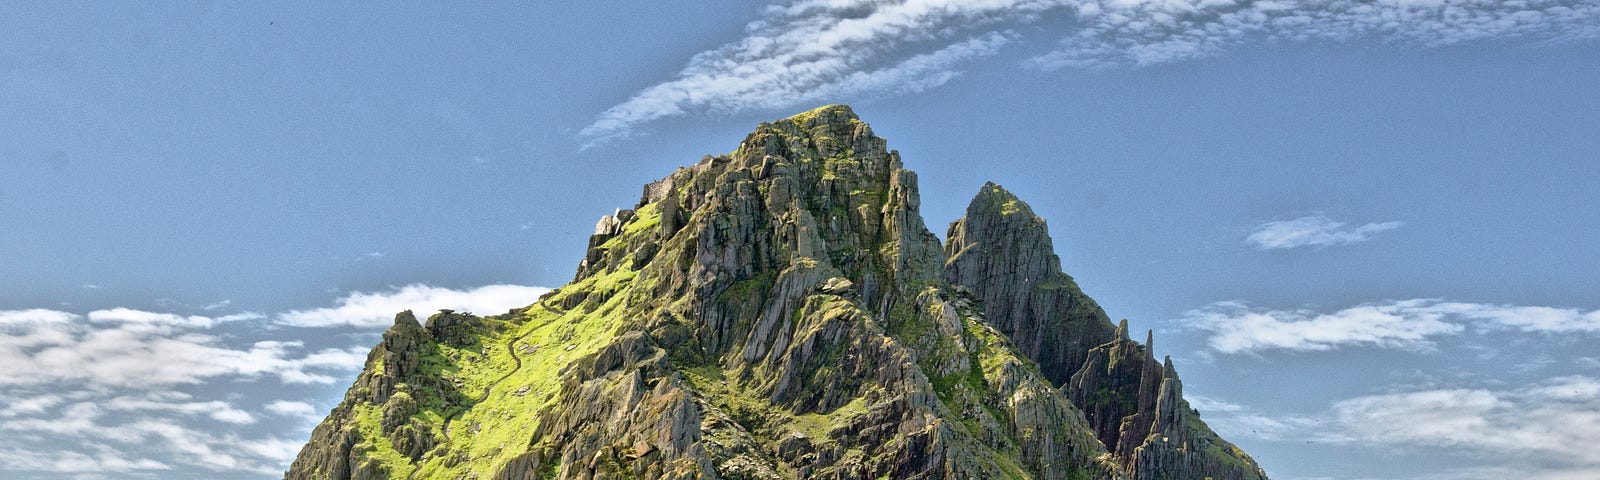 A mountain Island in Ireland